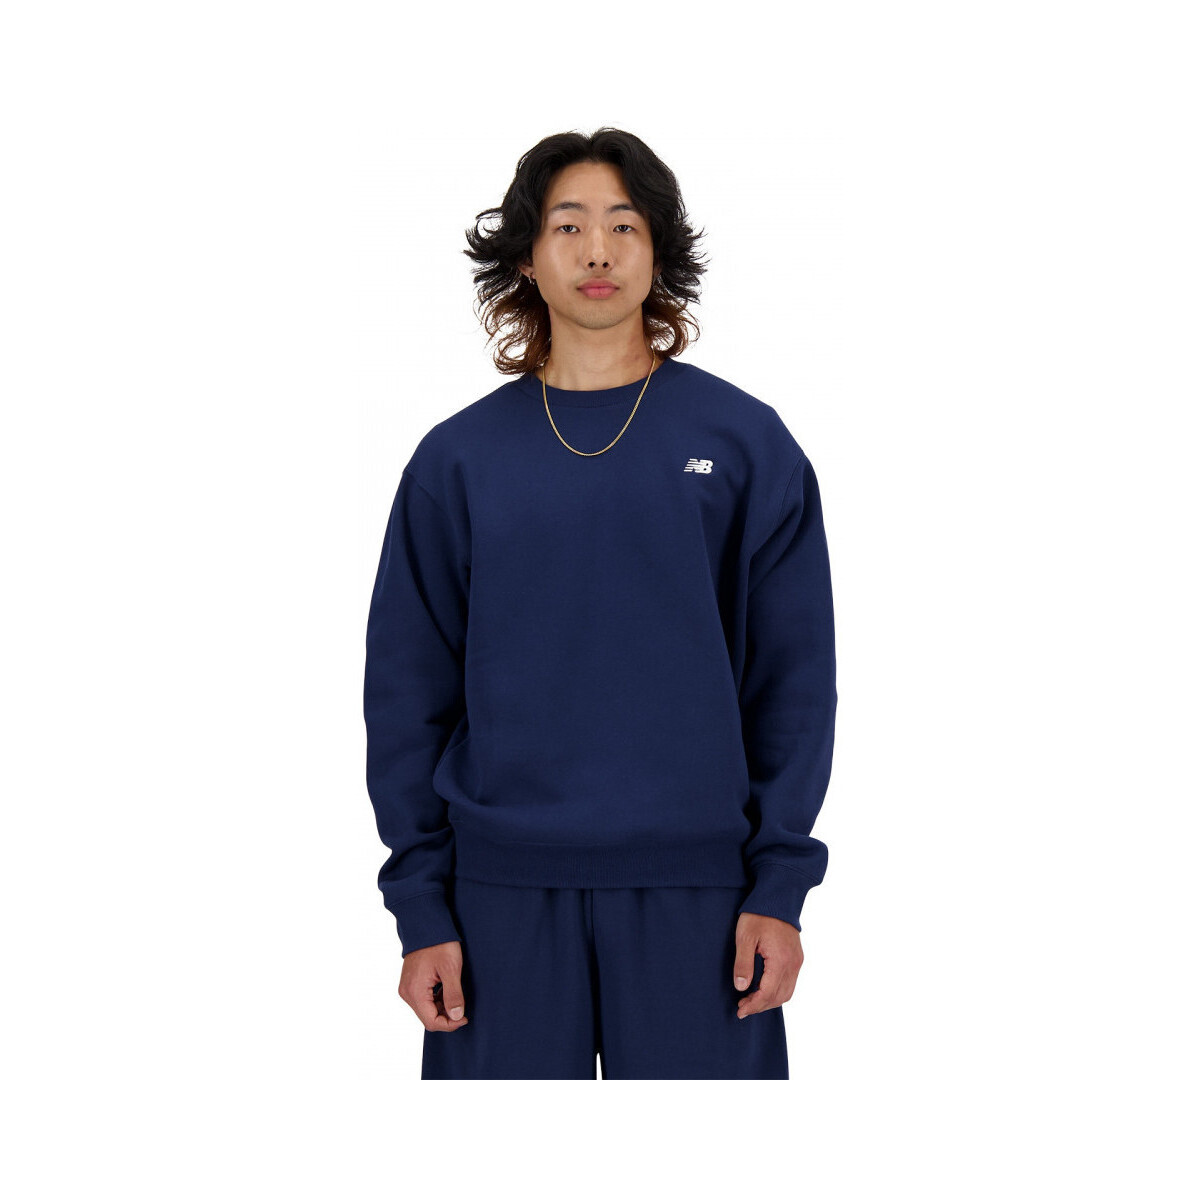 Oblačila Moški Puloverji New Balance Sport essentials fleece crew Modra